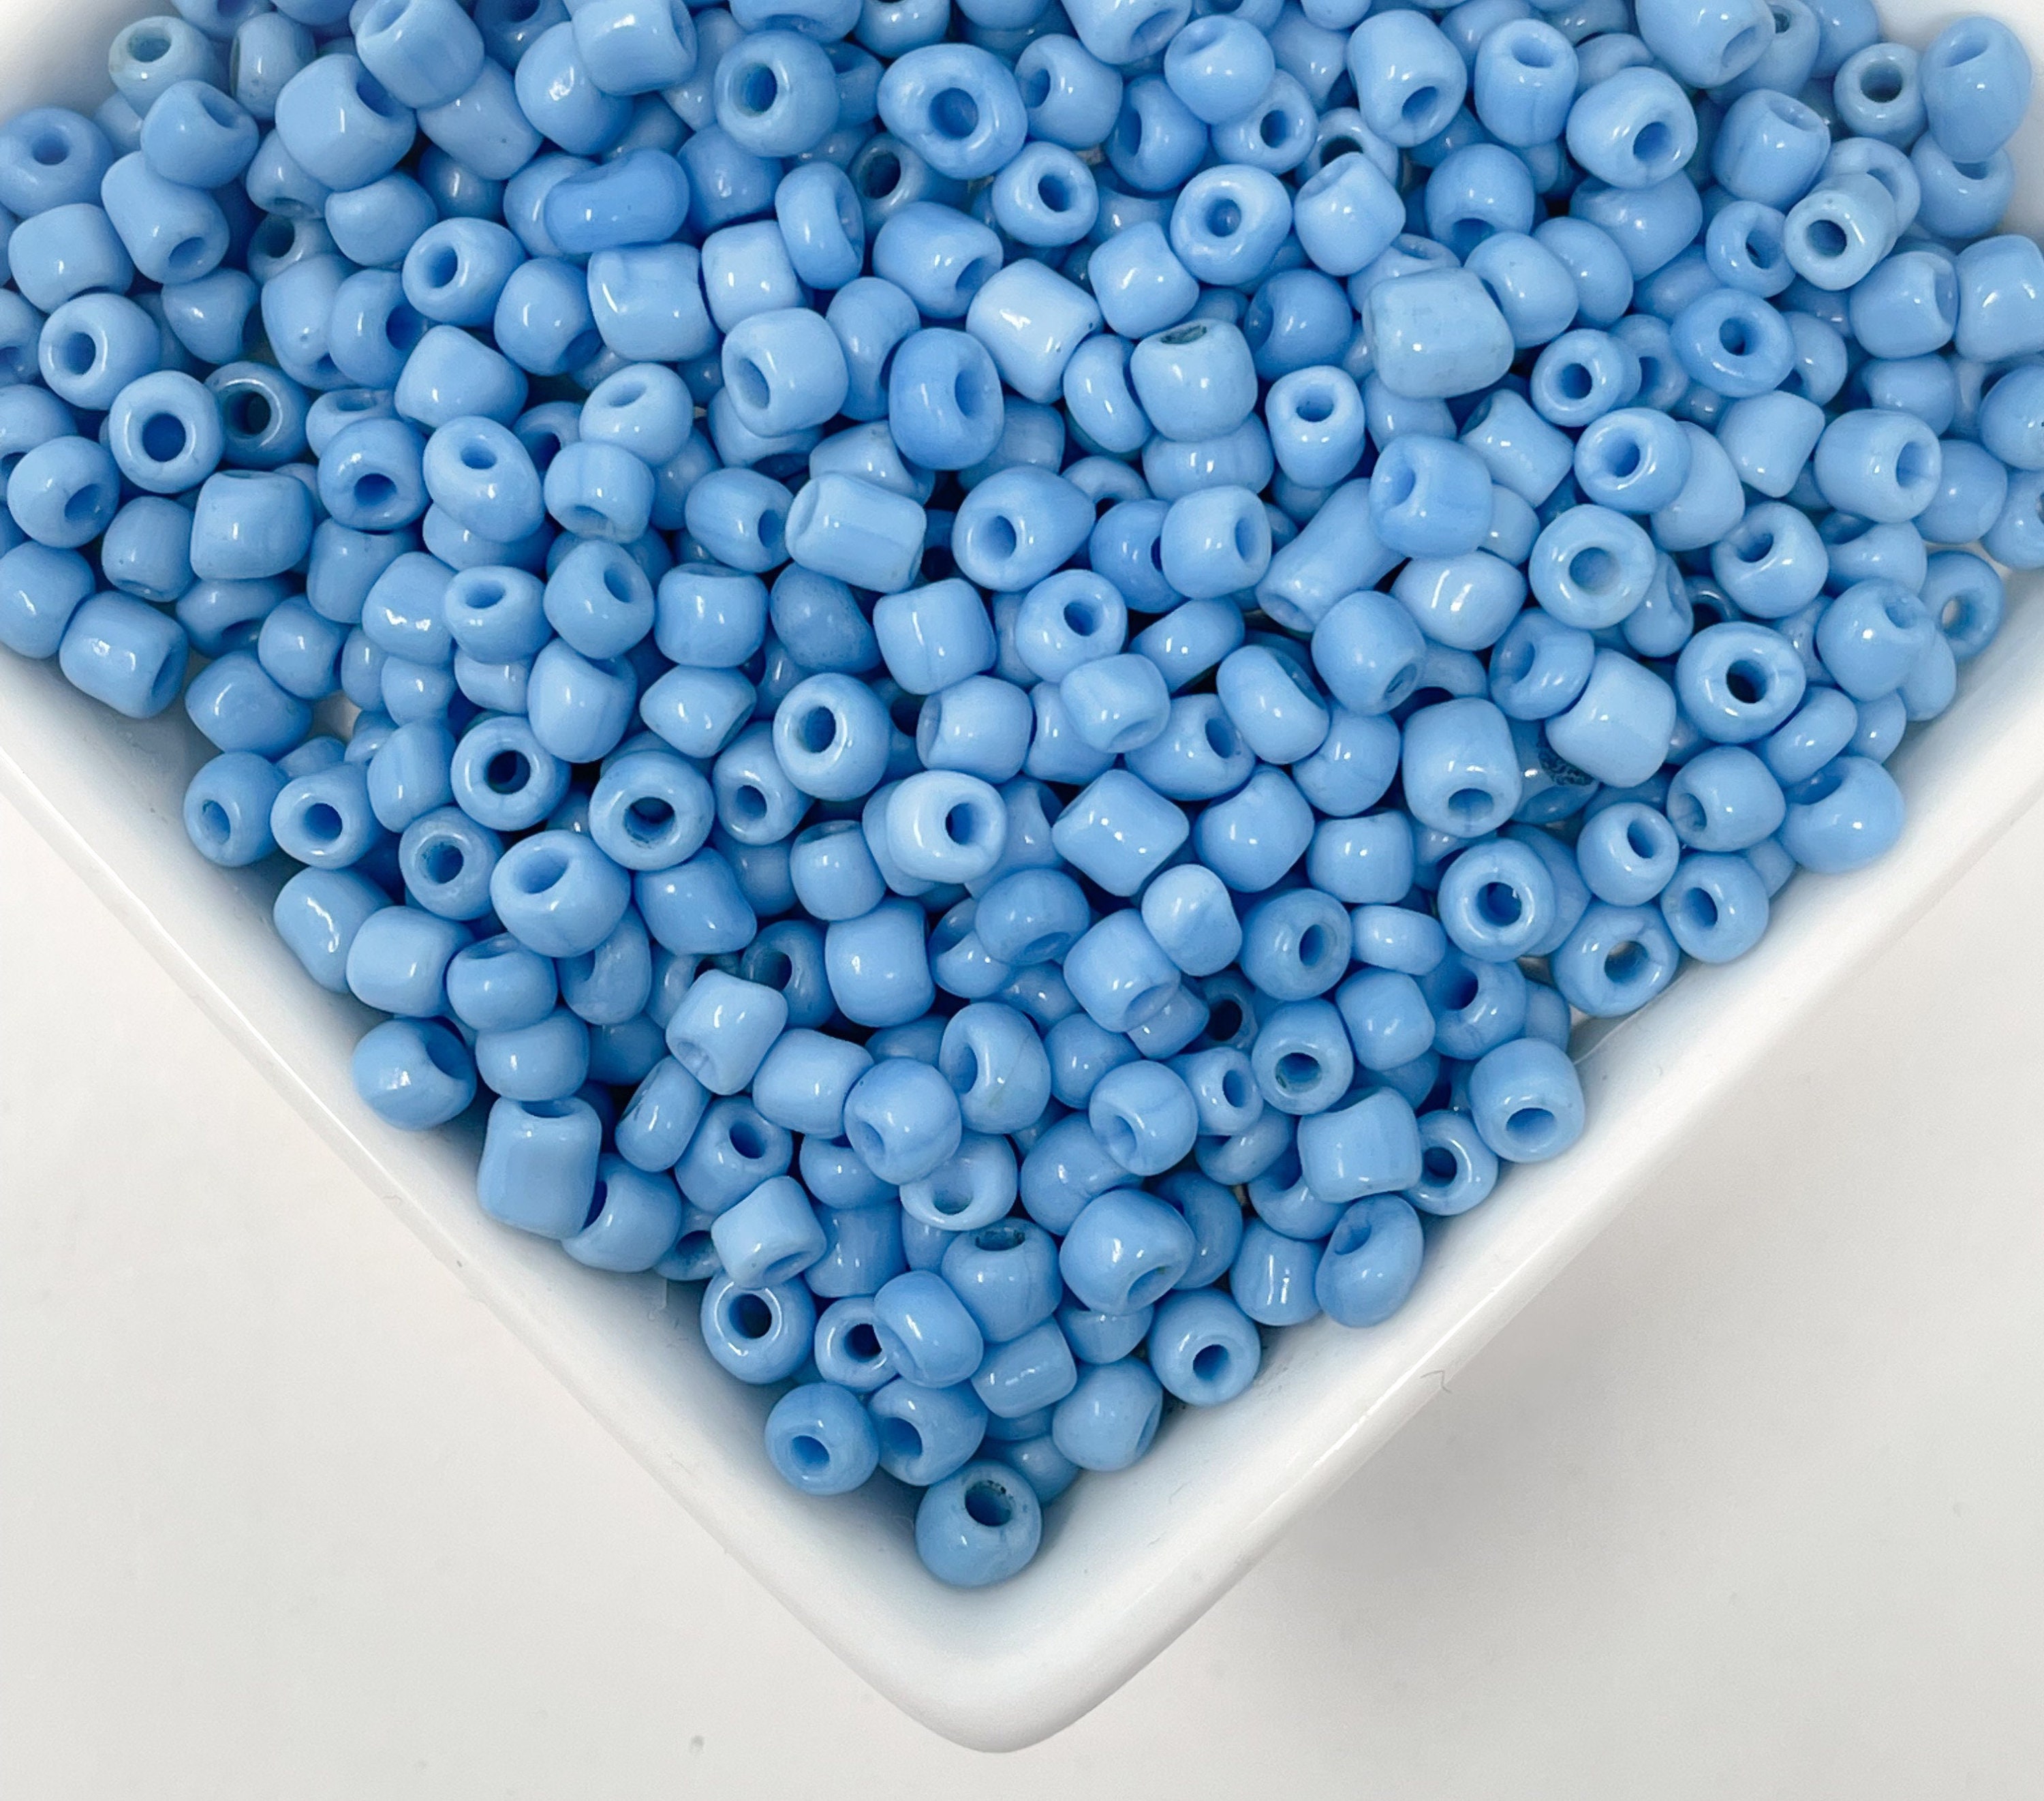 Dark Cornflower Blue - Size 8 Pony Beads